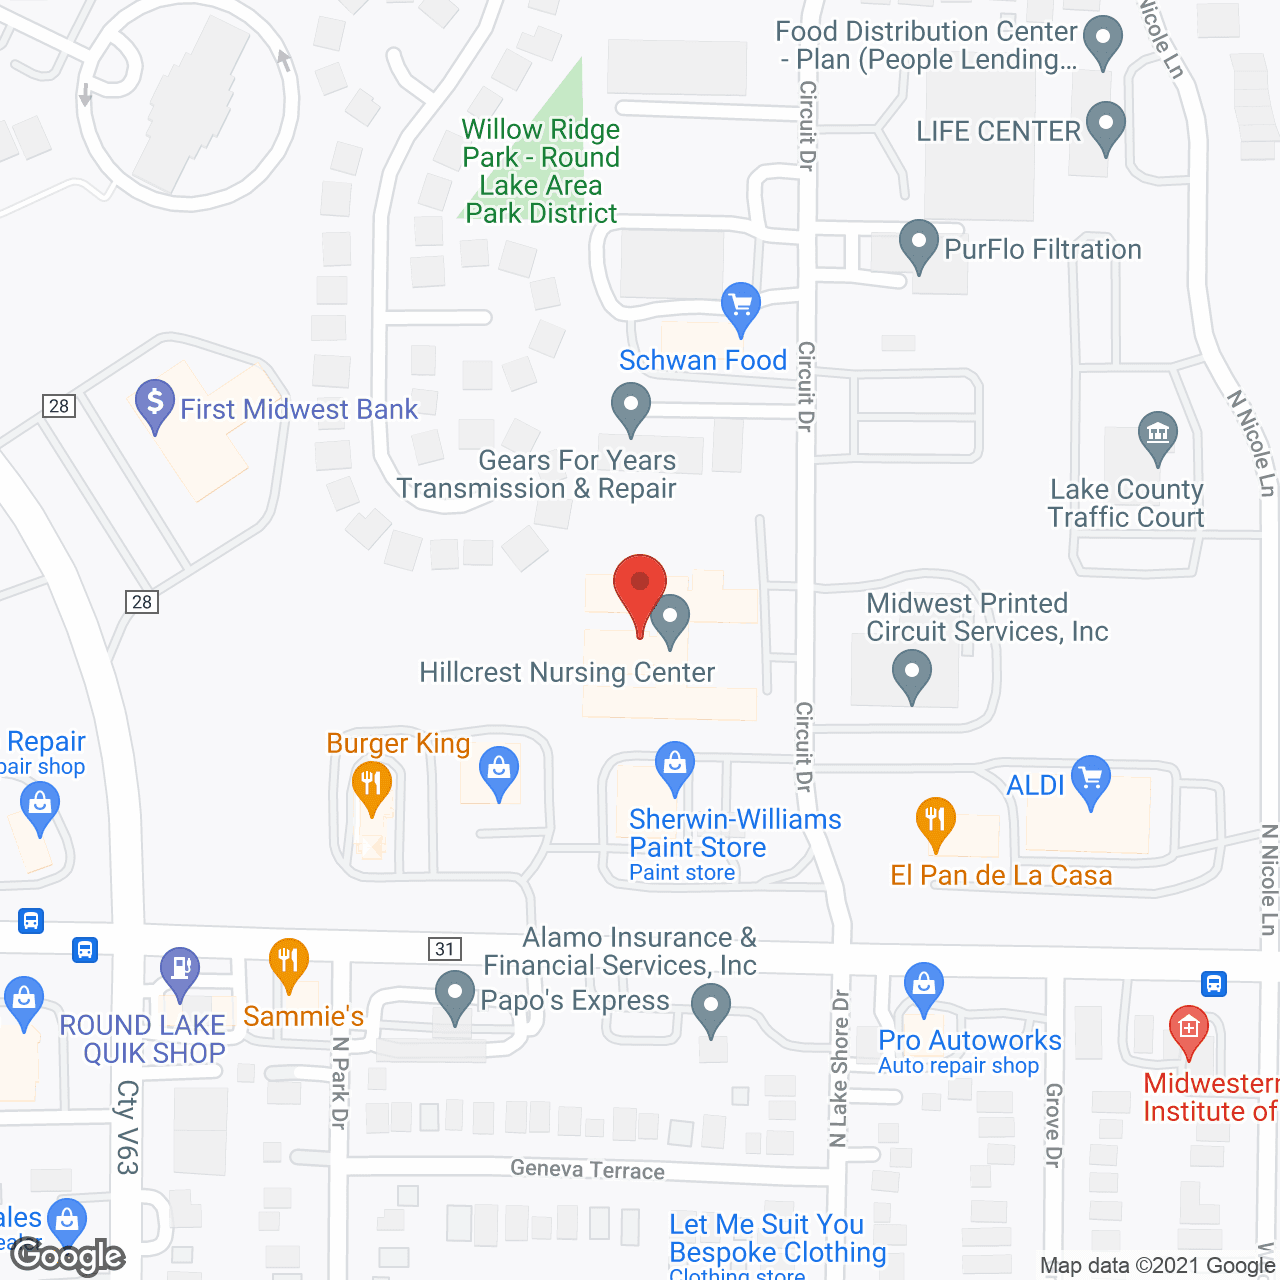 Hillcrest Nursing Center in google map